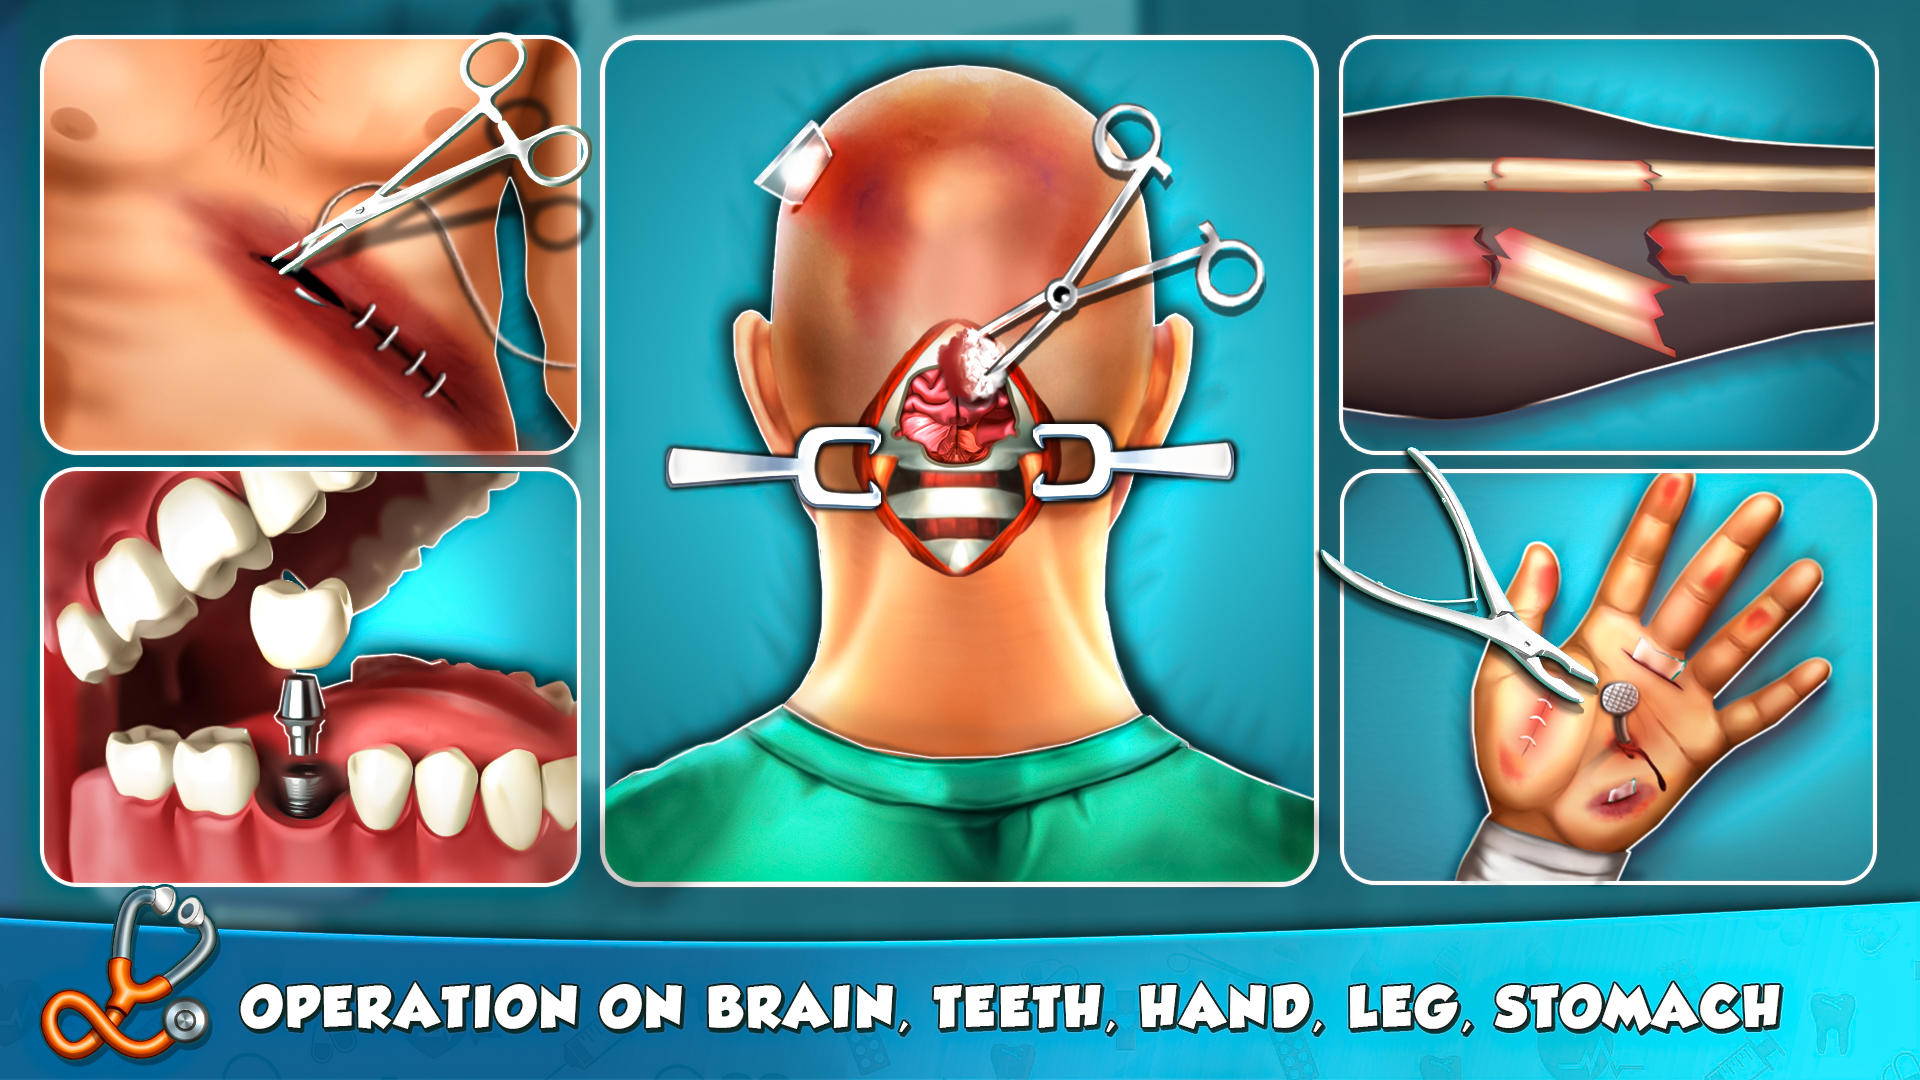 Doctor Operation Surgery Games: Offline Hospital Surgery Games 3D ภาพหน้าจอเกม